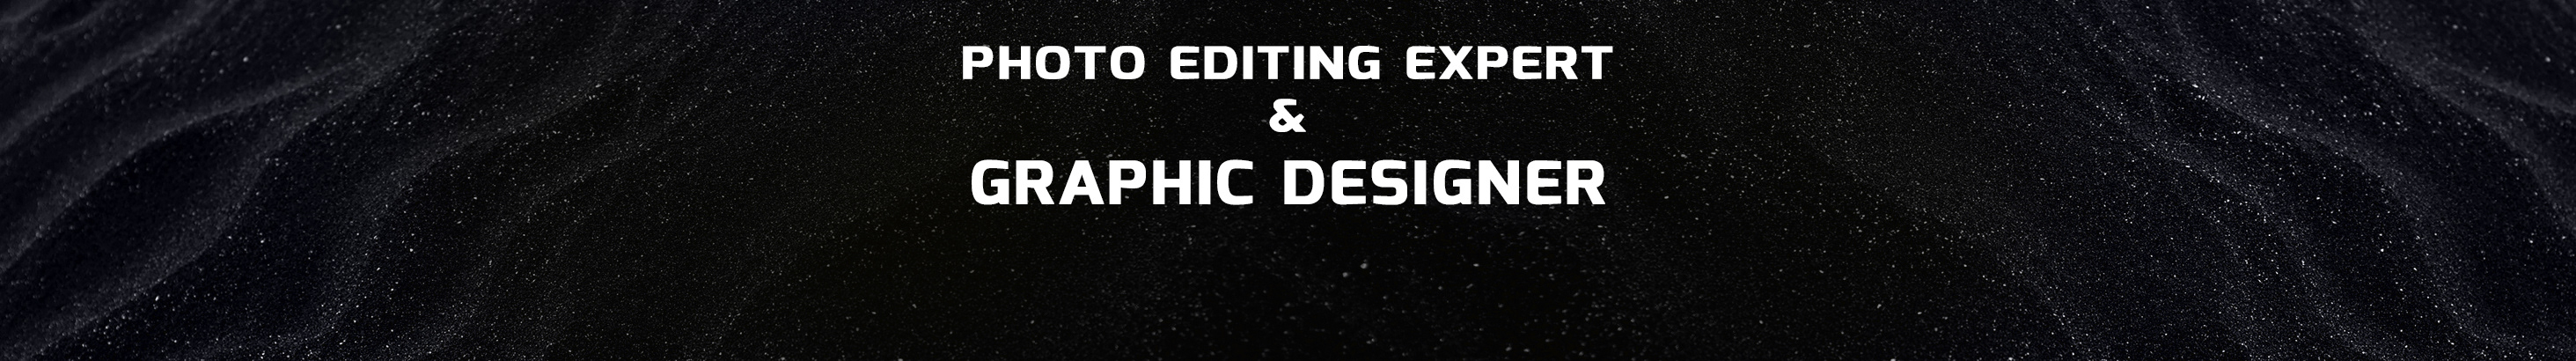 Photo Editor & Graphic Designers profilbanner